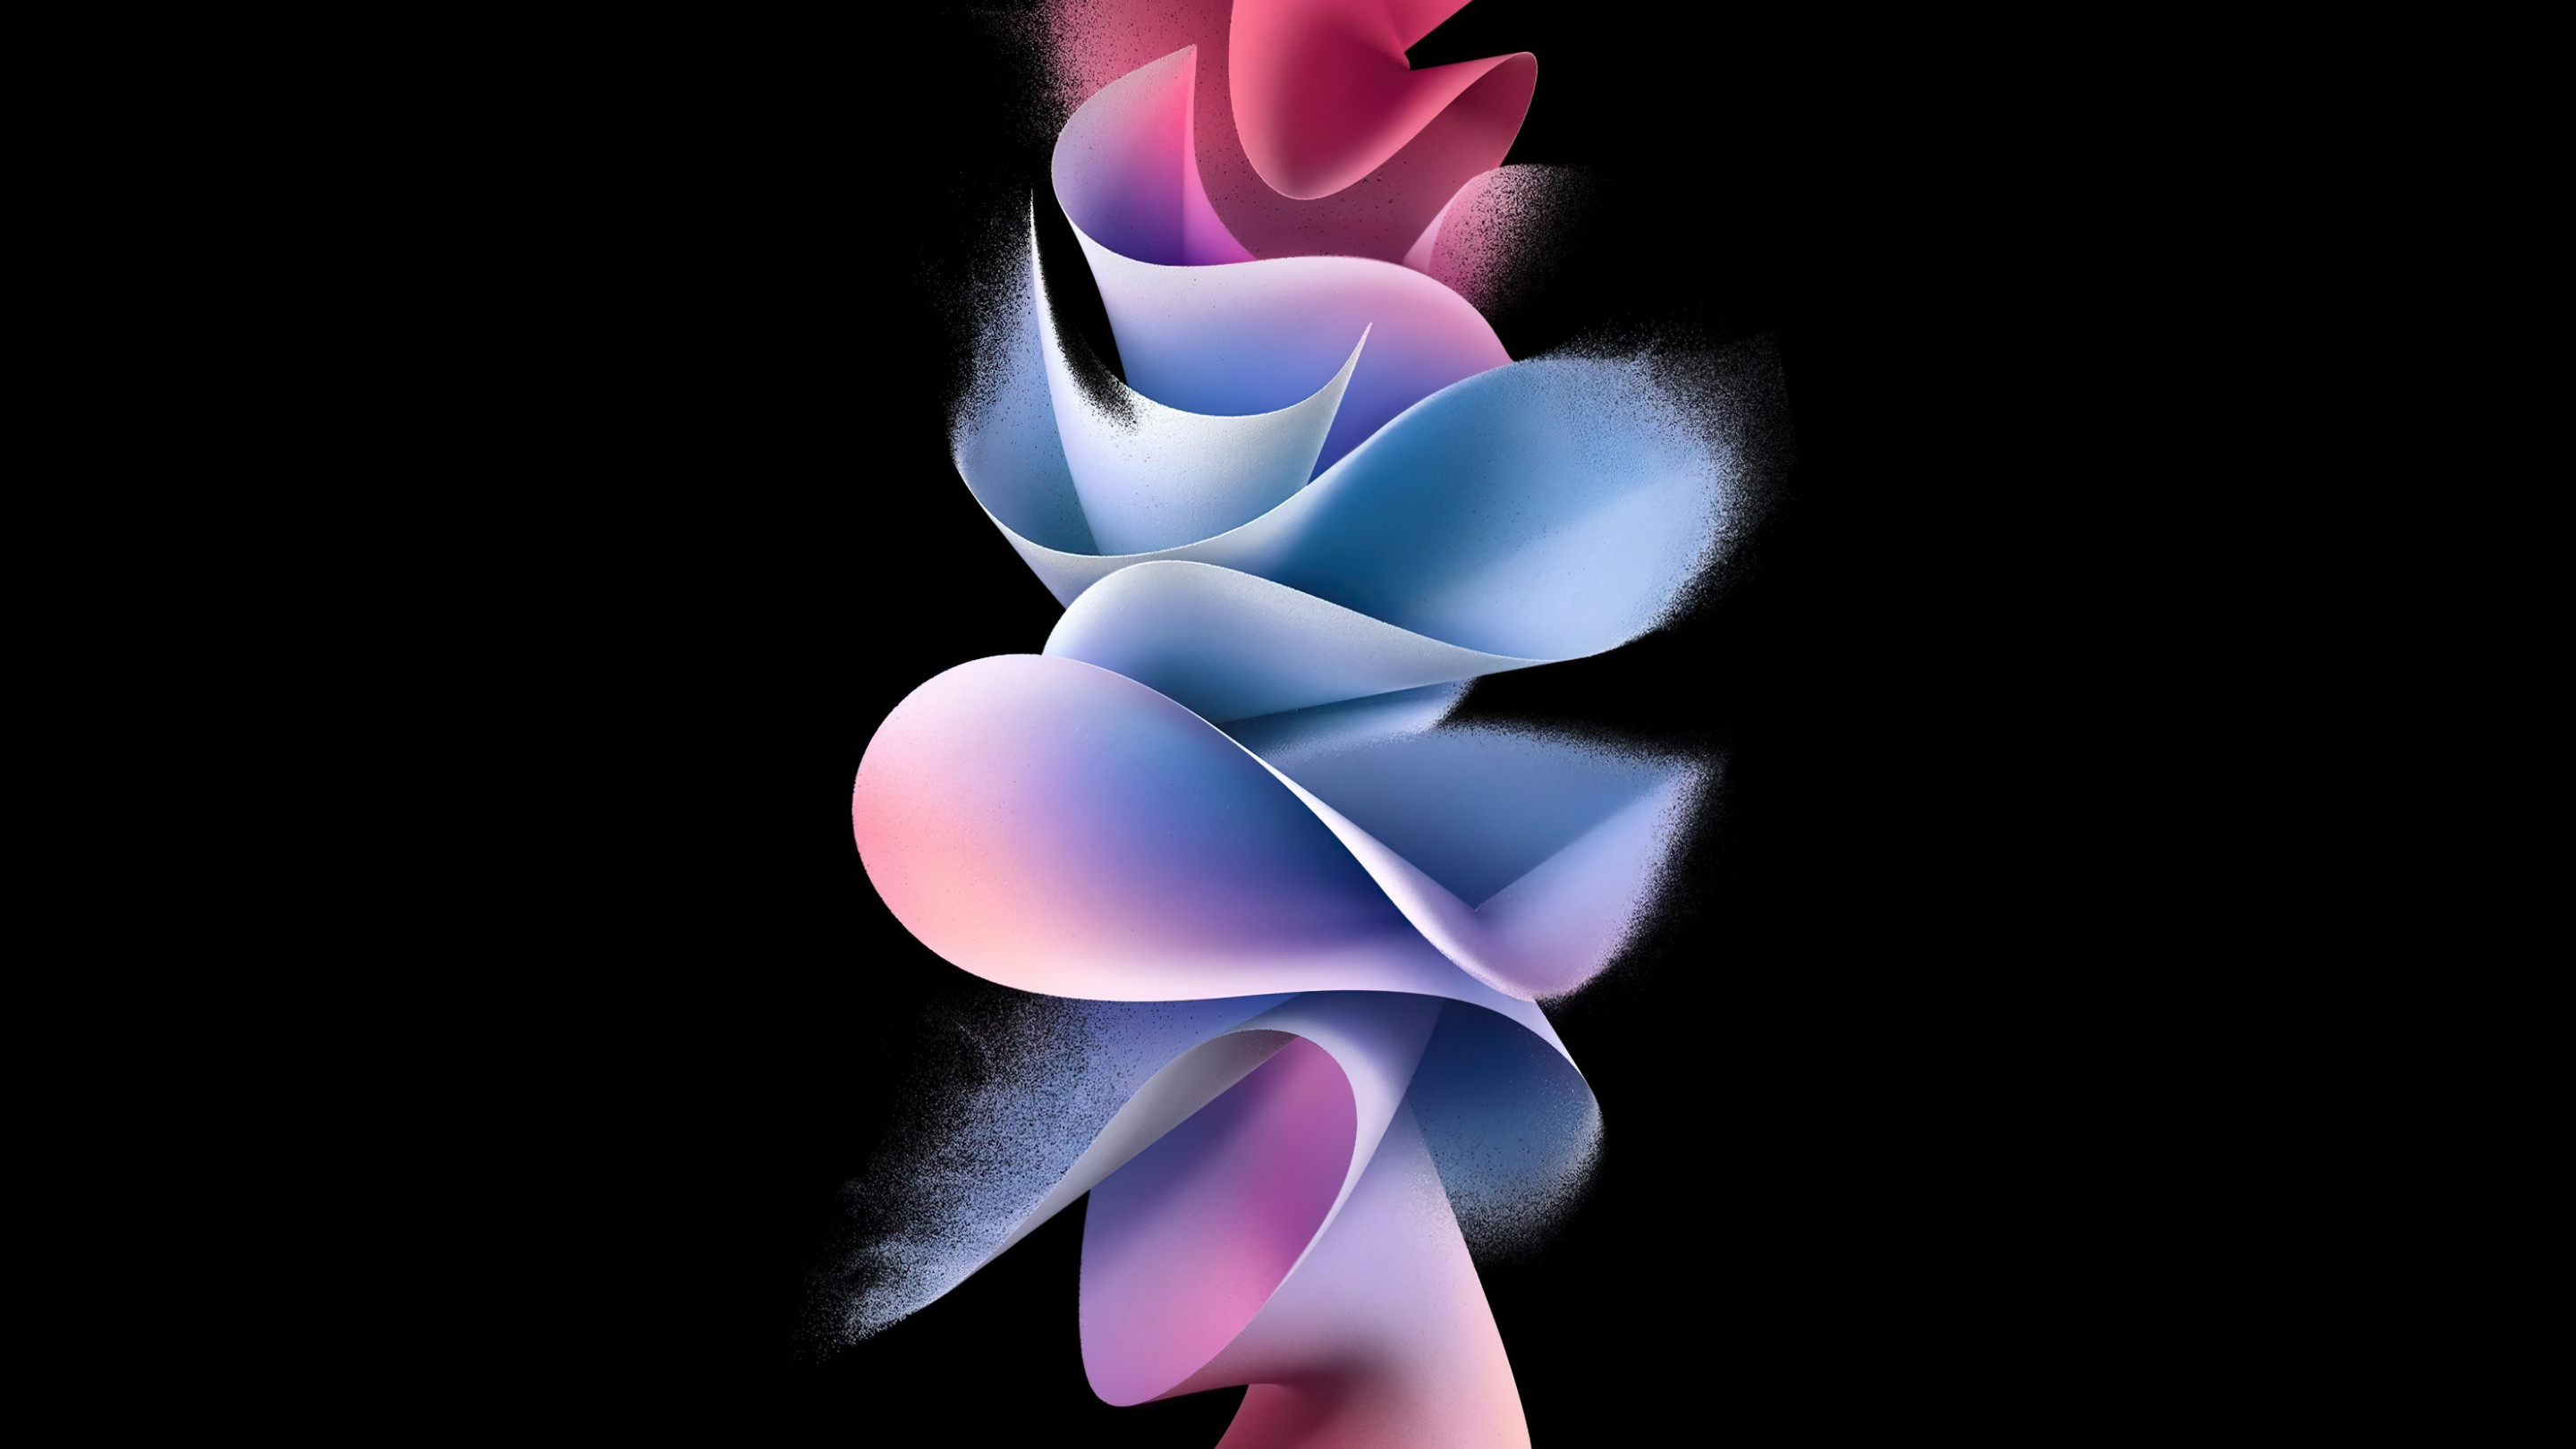 Insane abstract beauty on Samsung Galaxy Z Flip 3 wallpaper 2880x1620